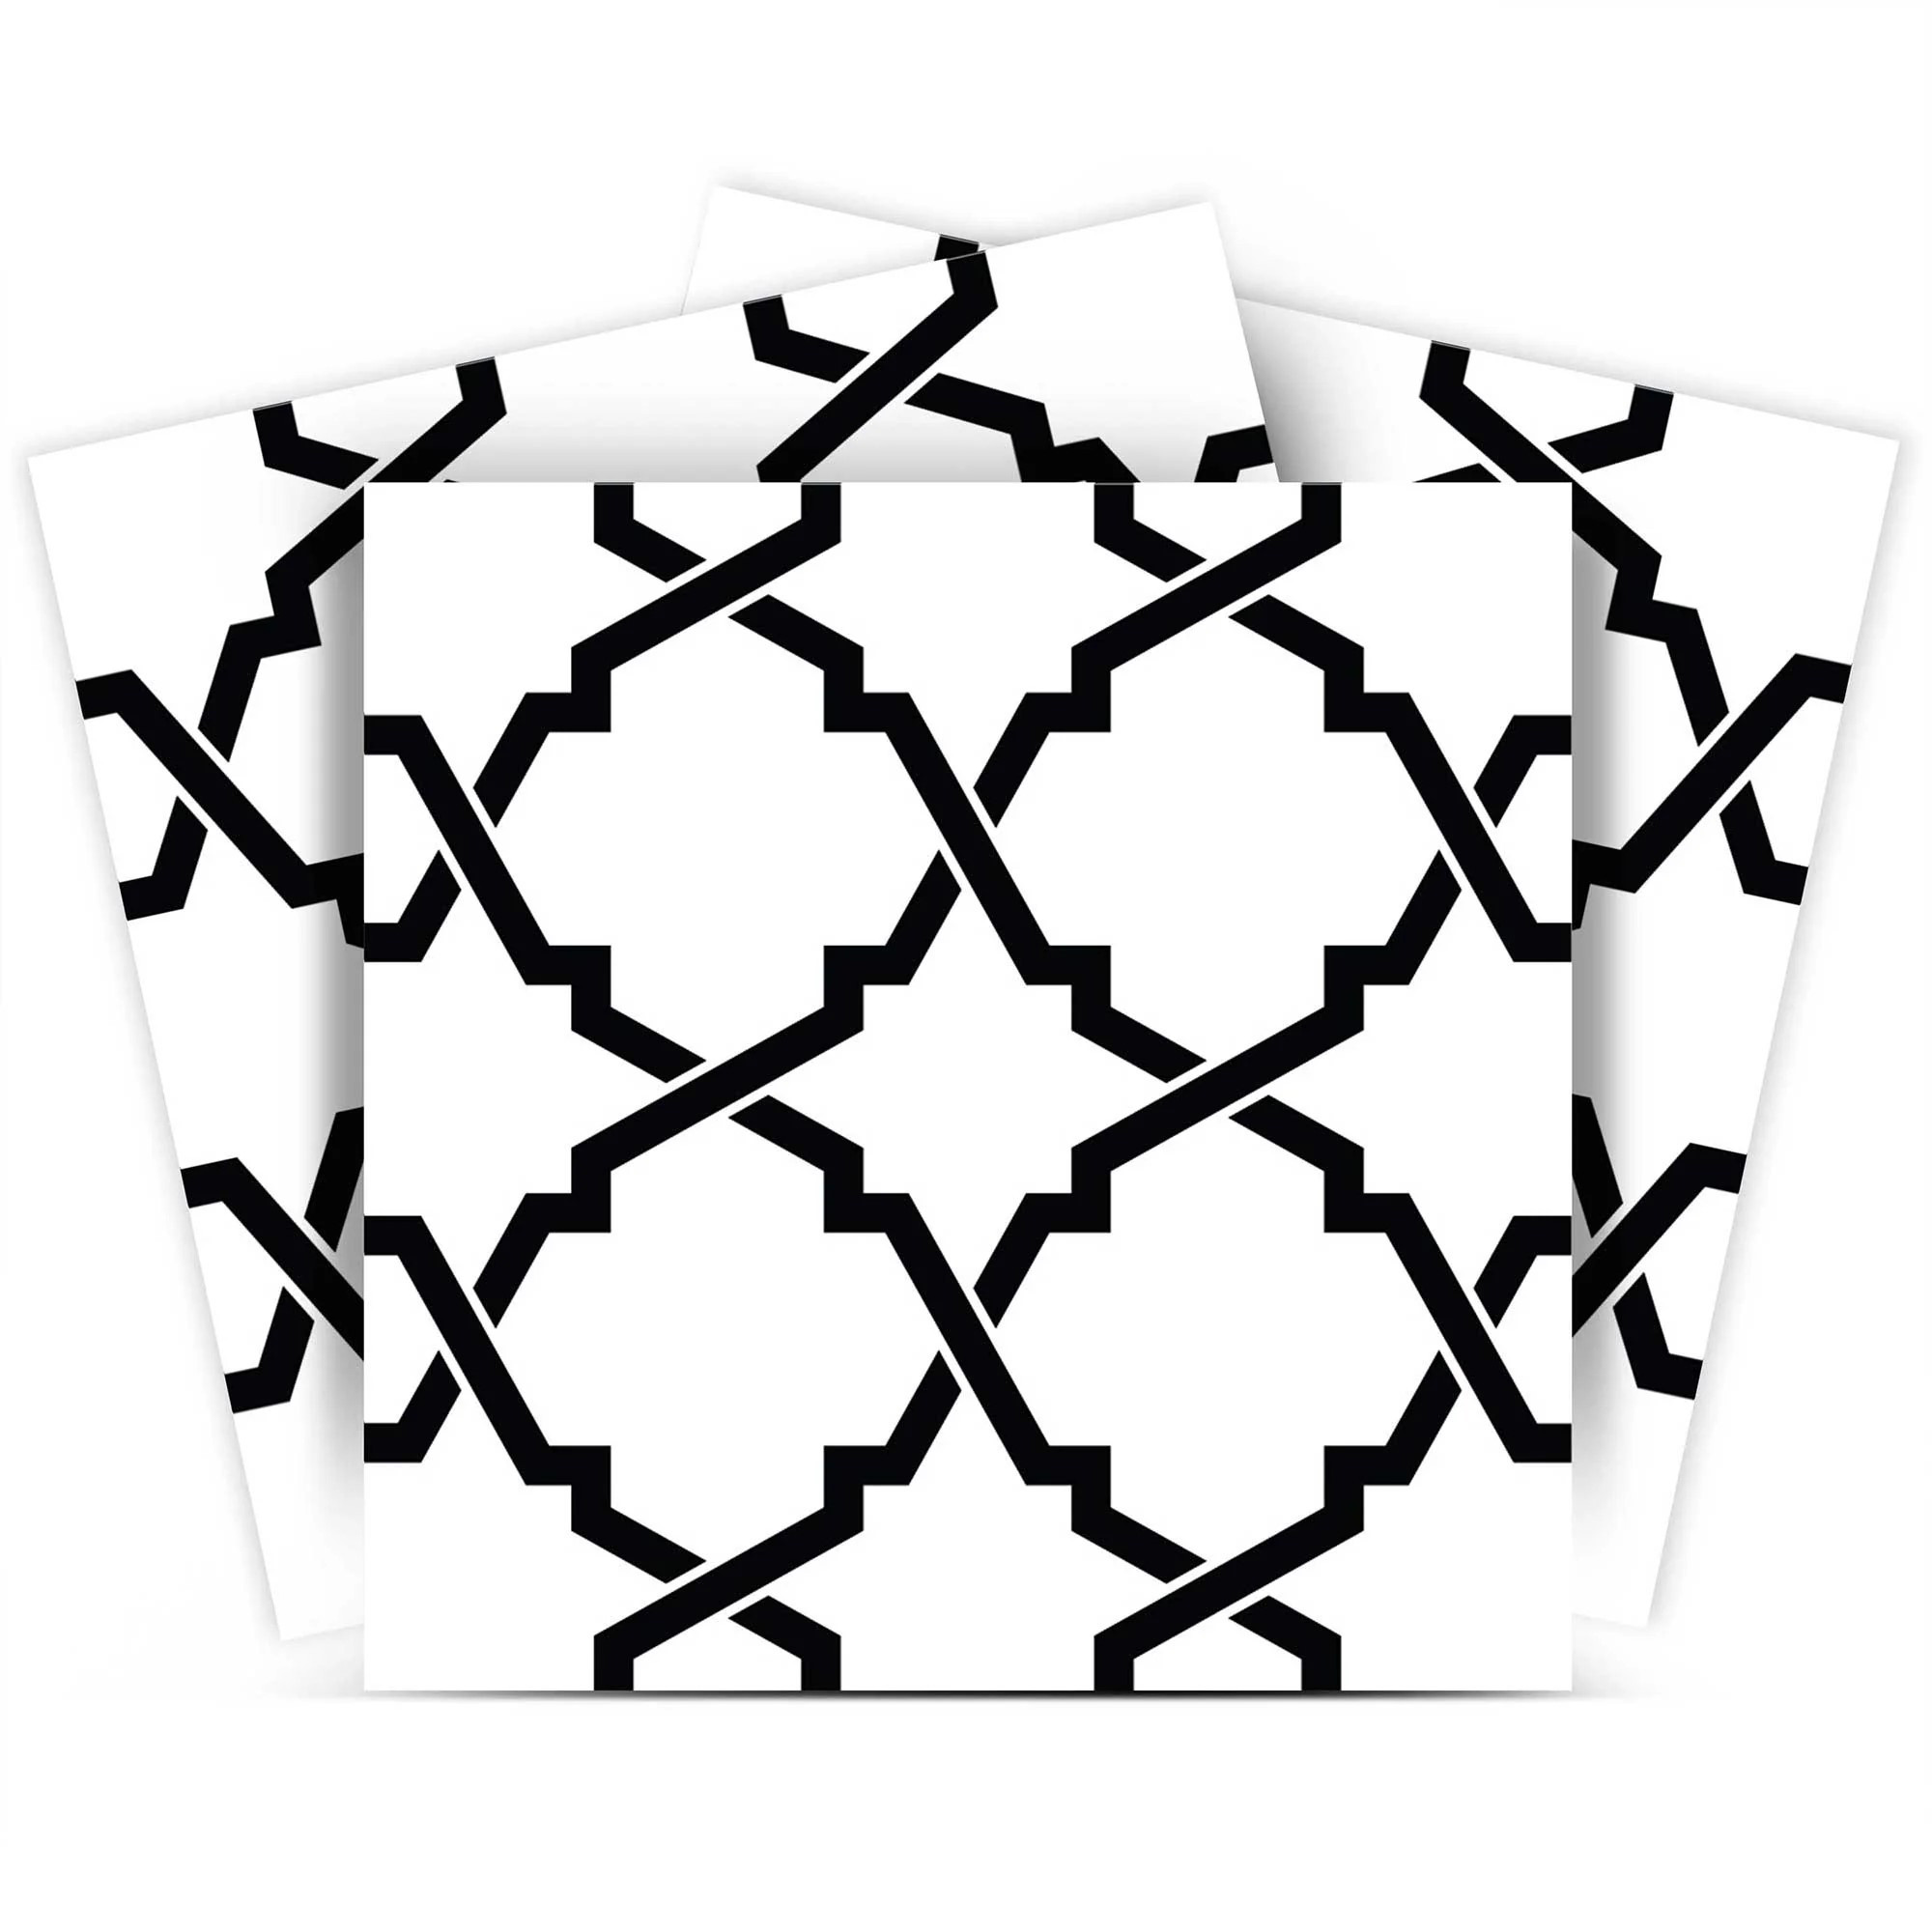 5" X 5" Black and White Quatrefoil Peel and Stick Tiles-399921-1